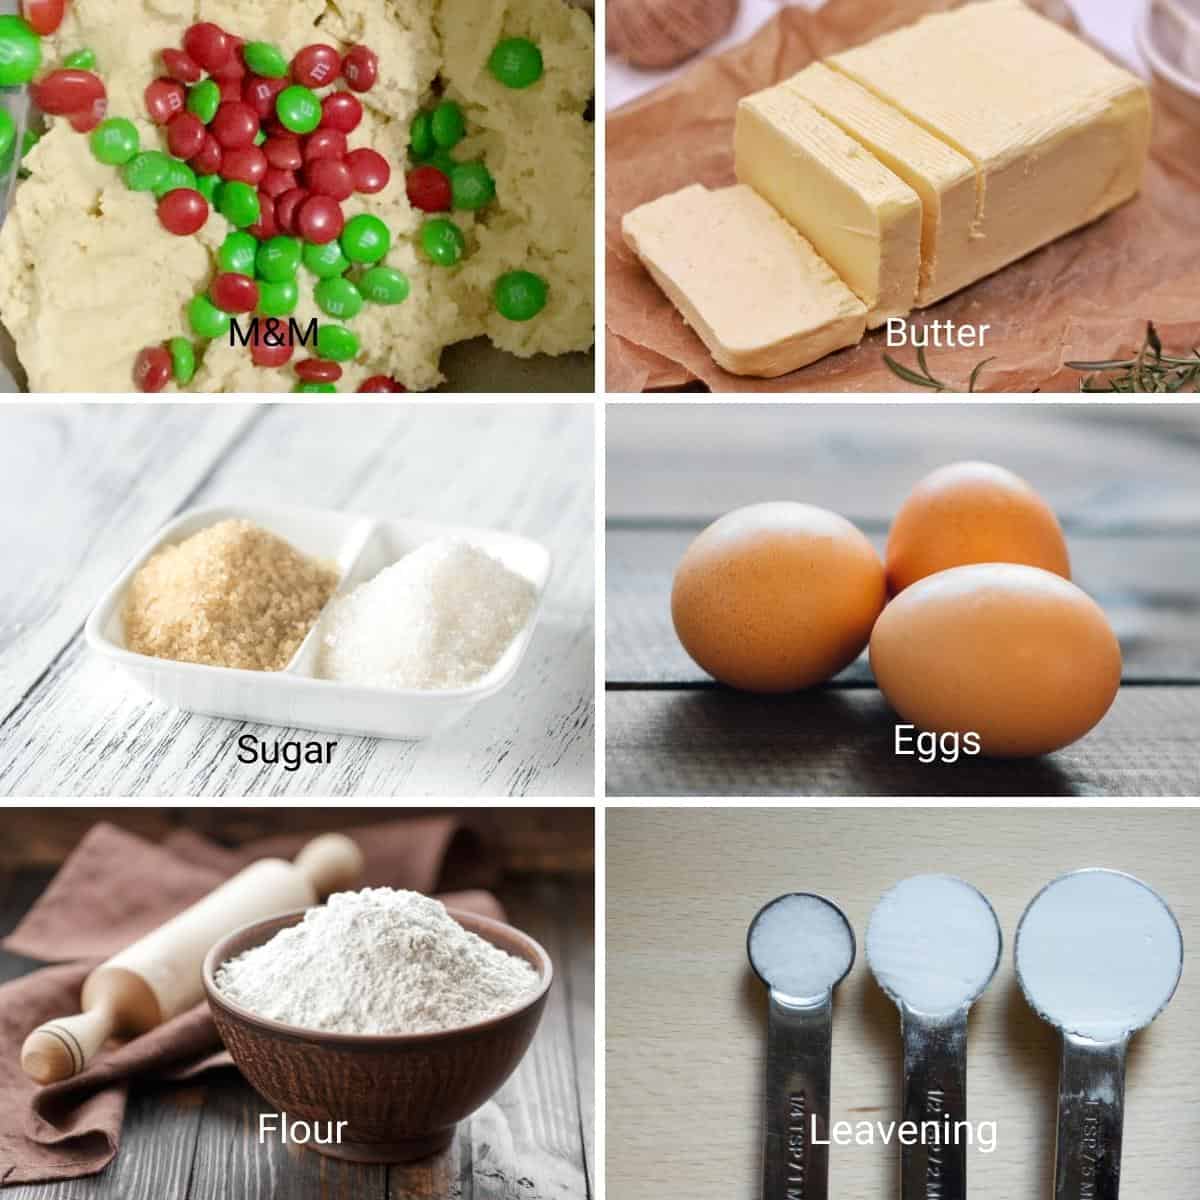 Ingredients for MM Cookies.